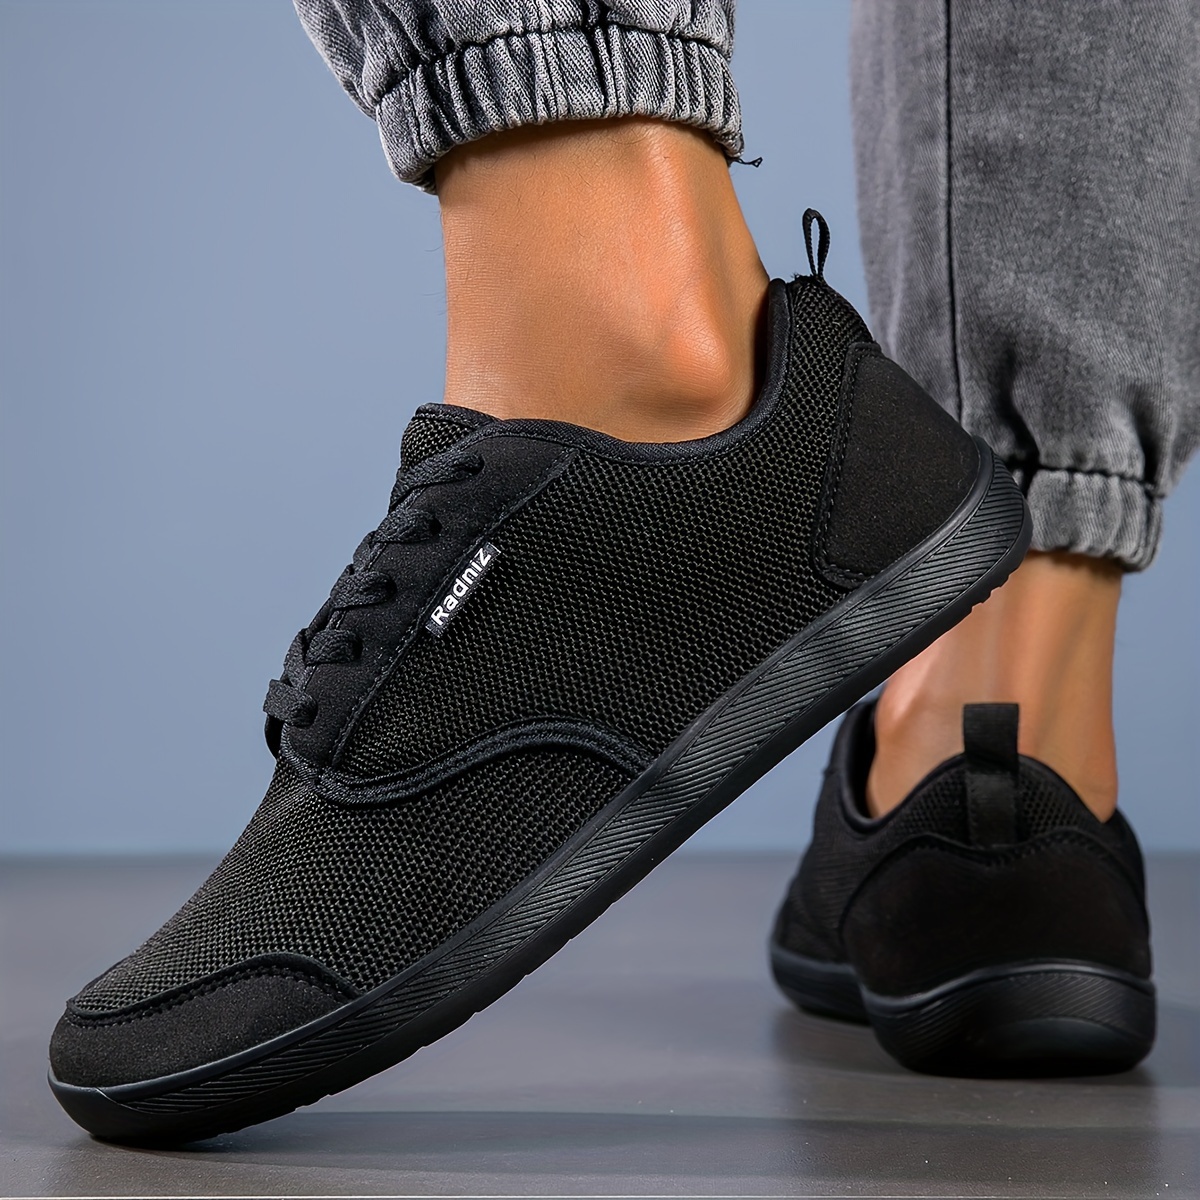 solid versatile sneakers men s minimalist style round toe details 2